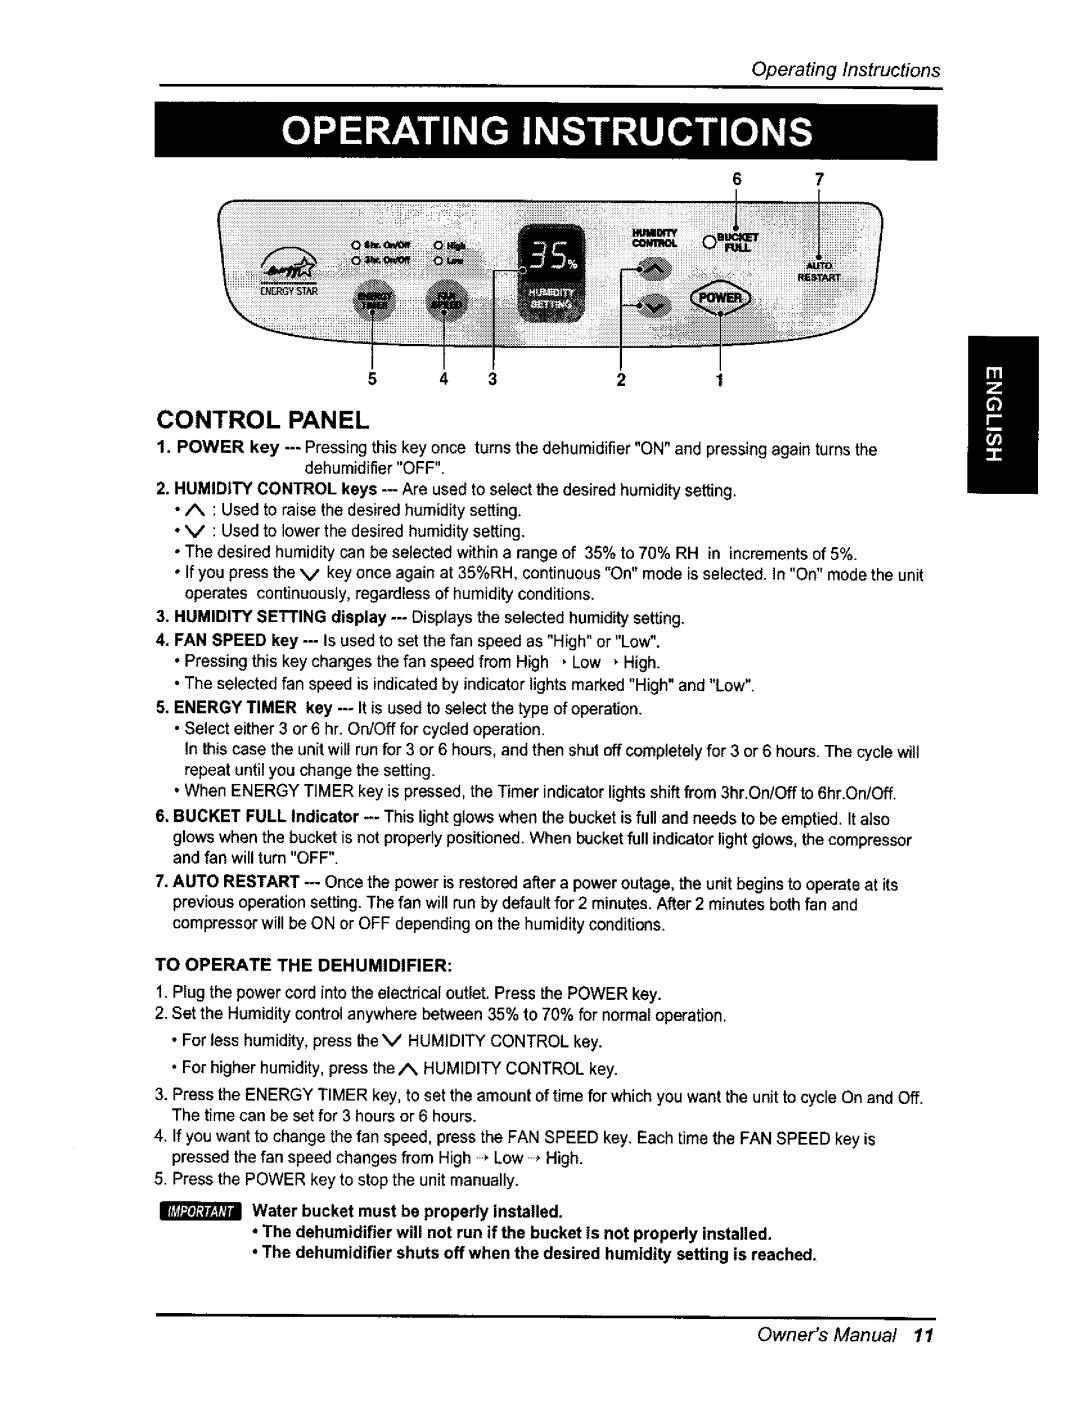 Kenmore 580.54701 owner manual Control Panel, OperatingInstructions 